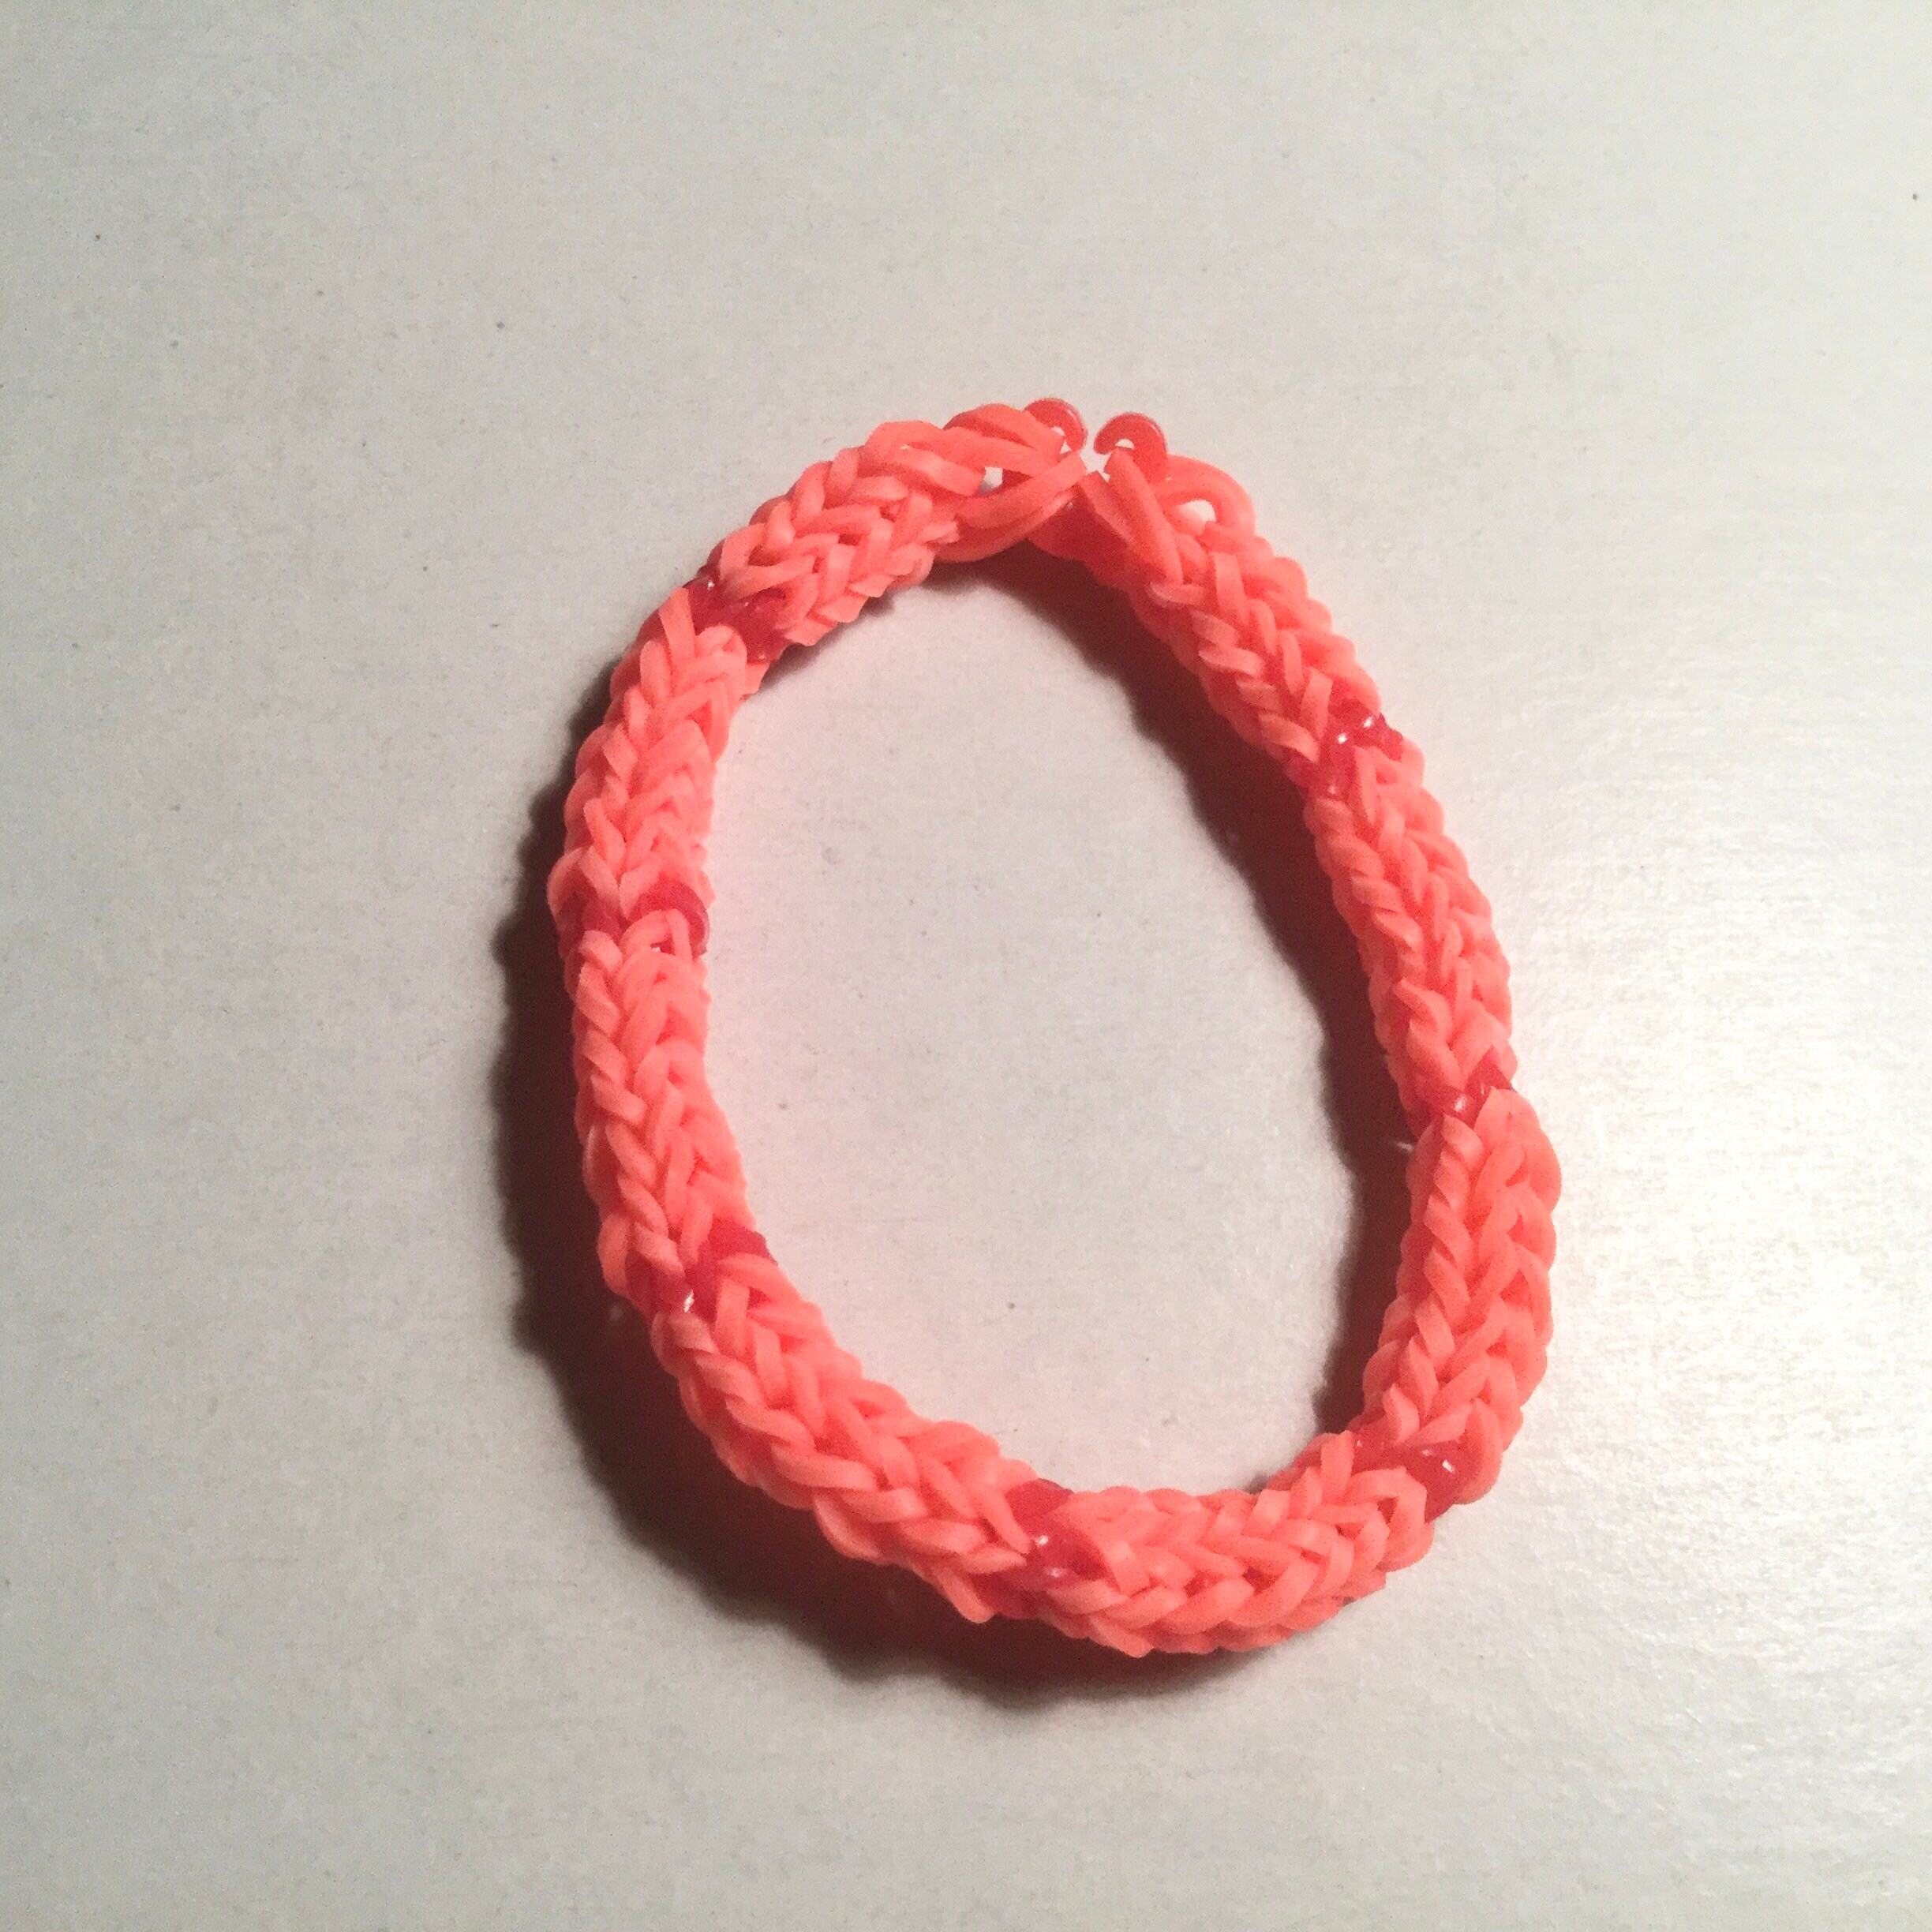 Tangerine orange and red woven rubber band bracelet